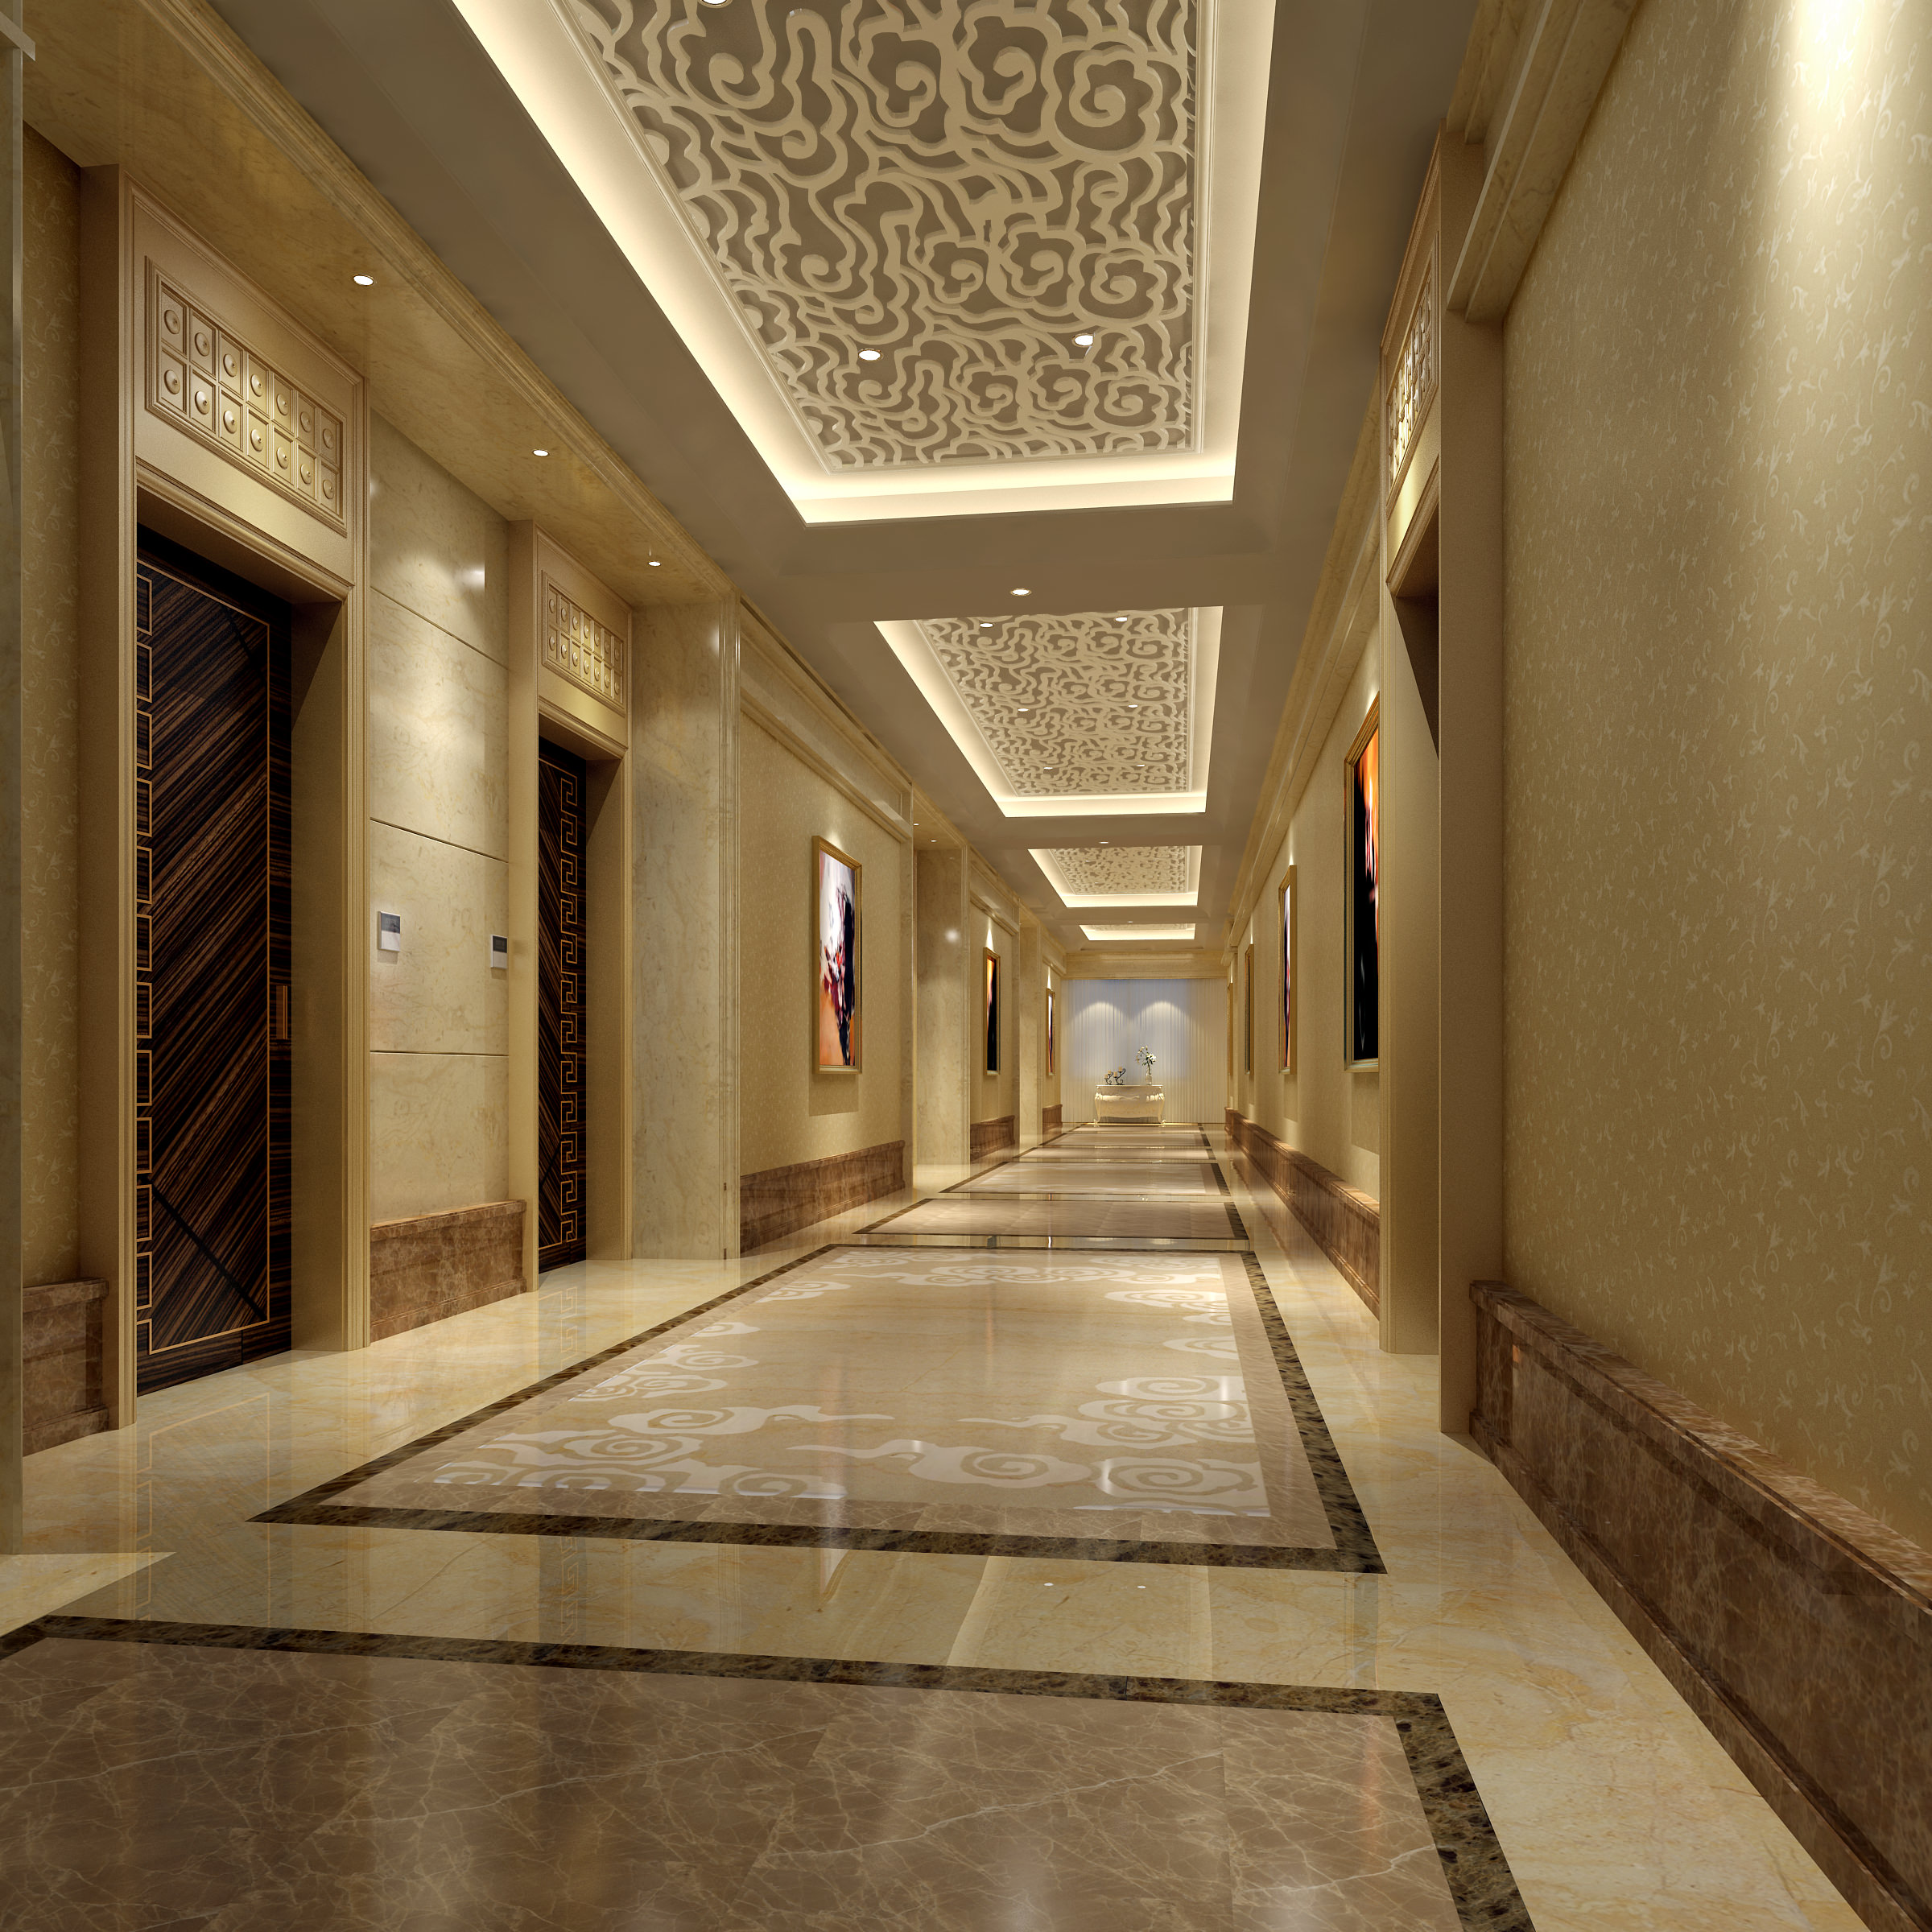 3D Corridor with Striped Designer Elevator | CGTrader